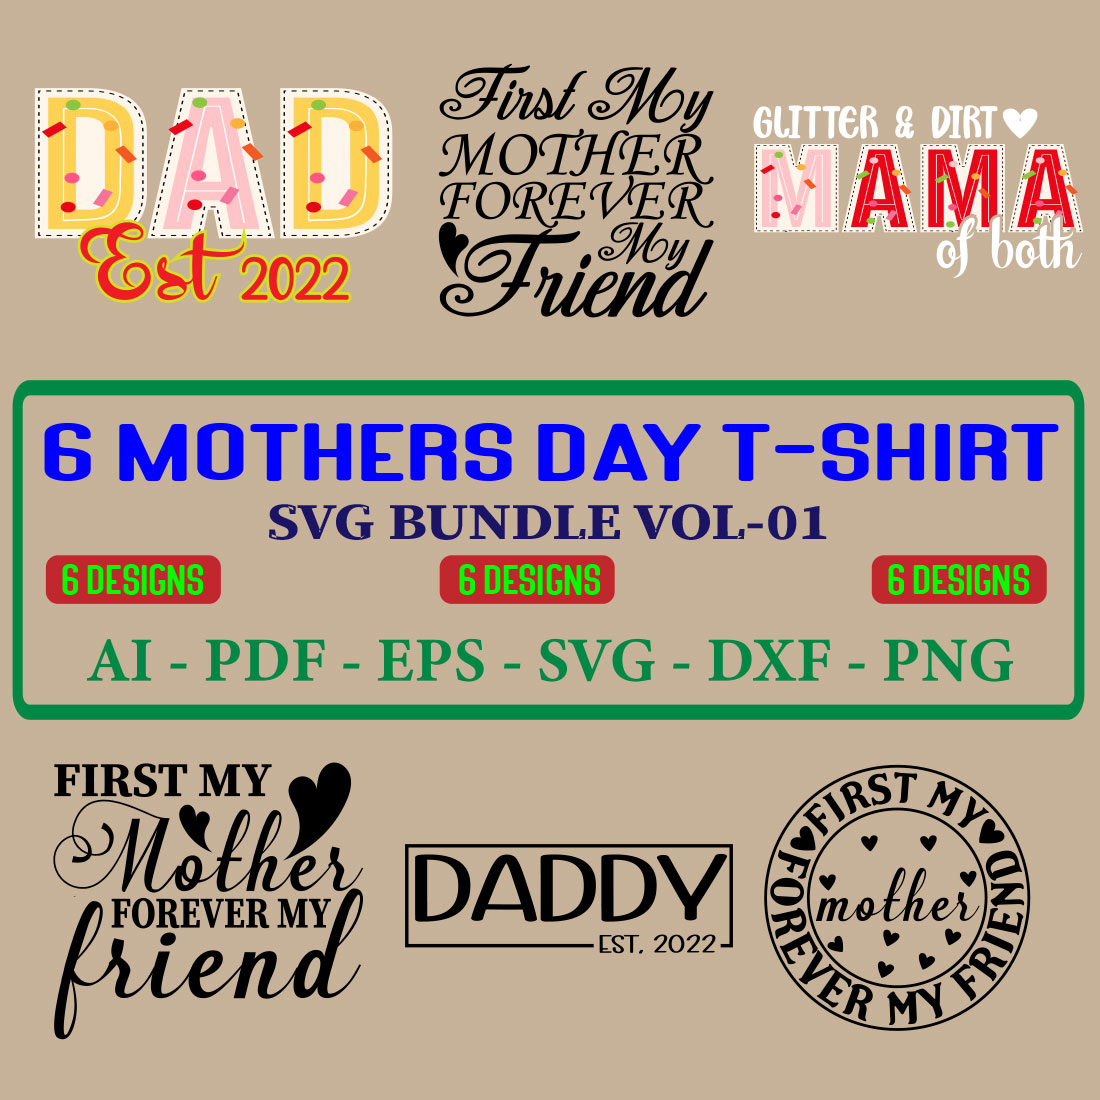 6 Mothers Day T-shirt SVG Bundle Vol-01 cover image.